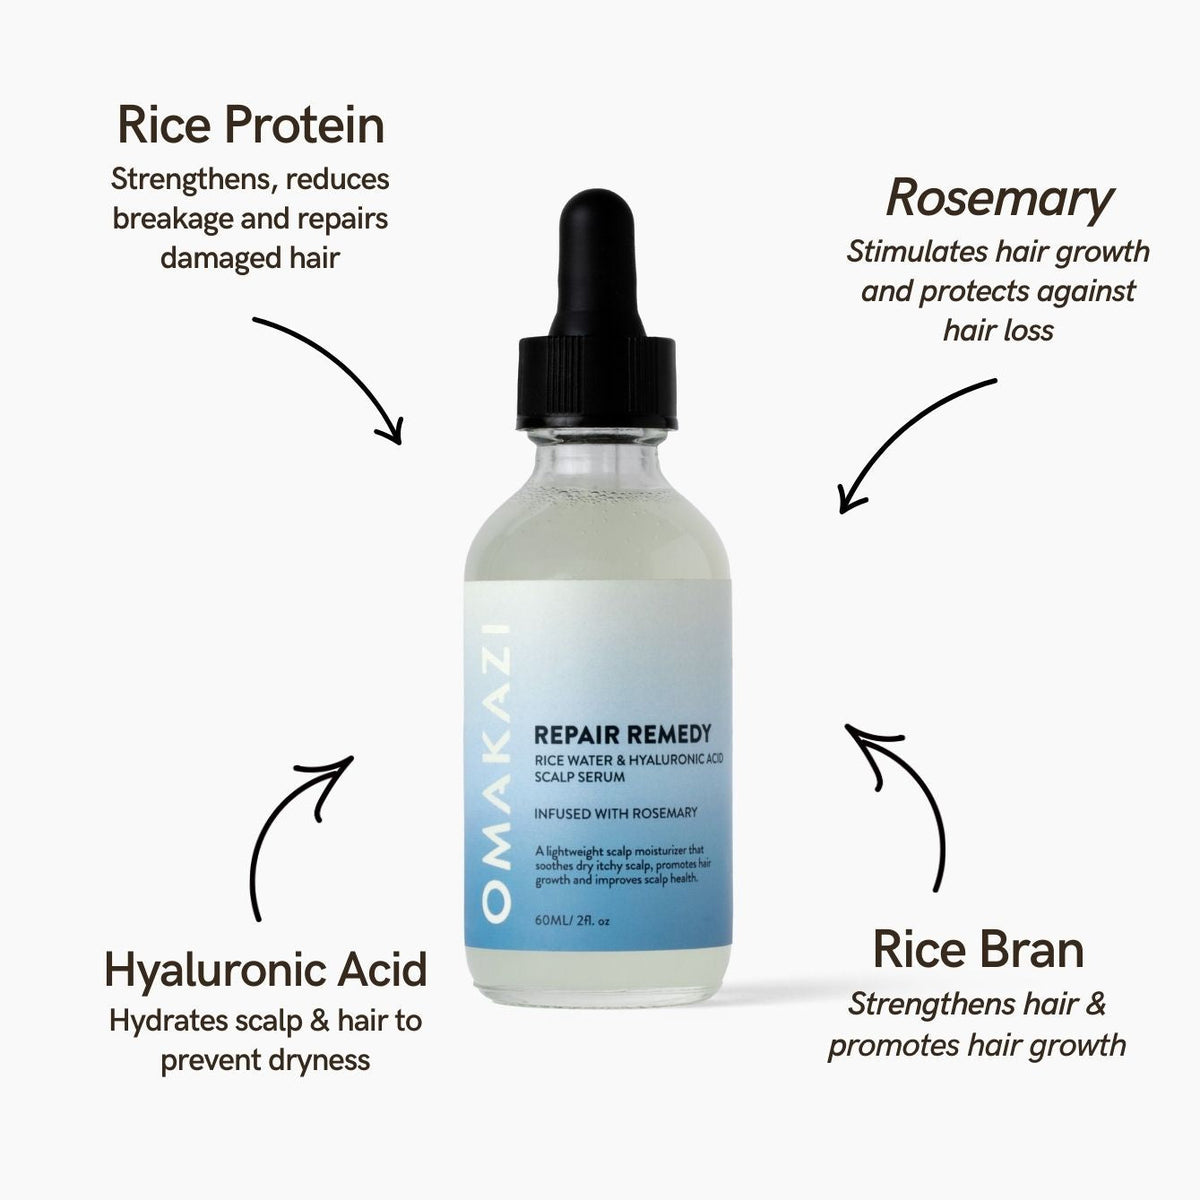 Repair Remedy Rice Water & Hyaluronic Acid Scalp Serum